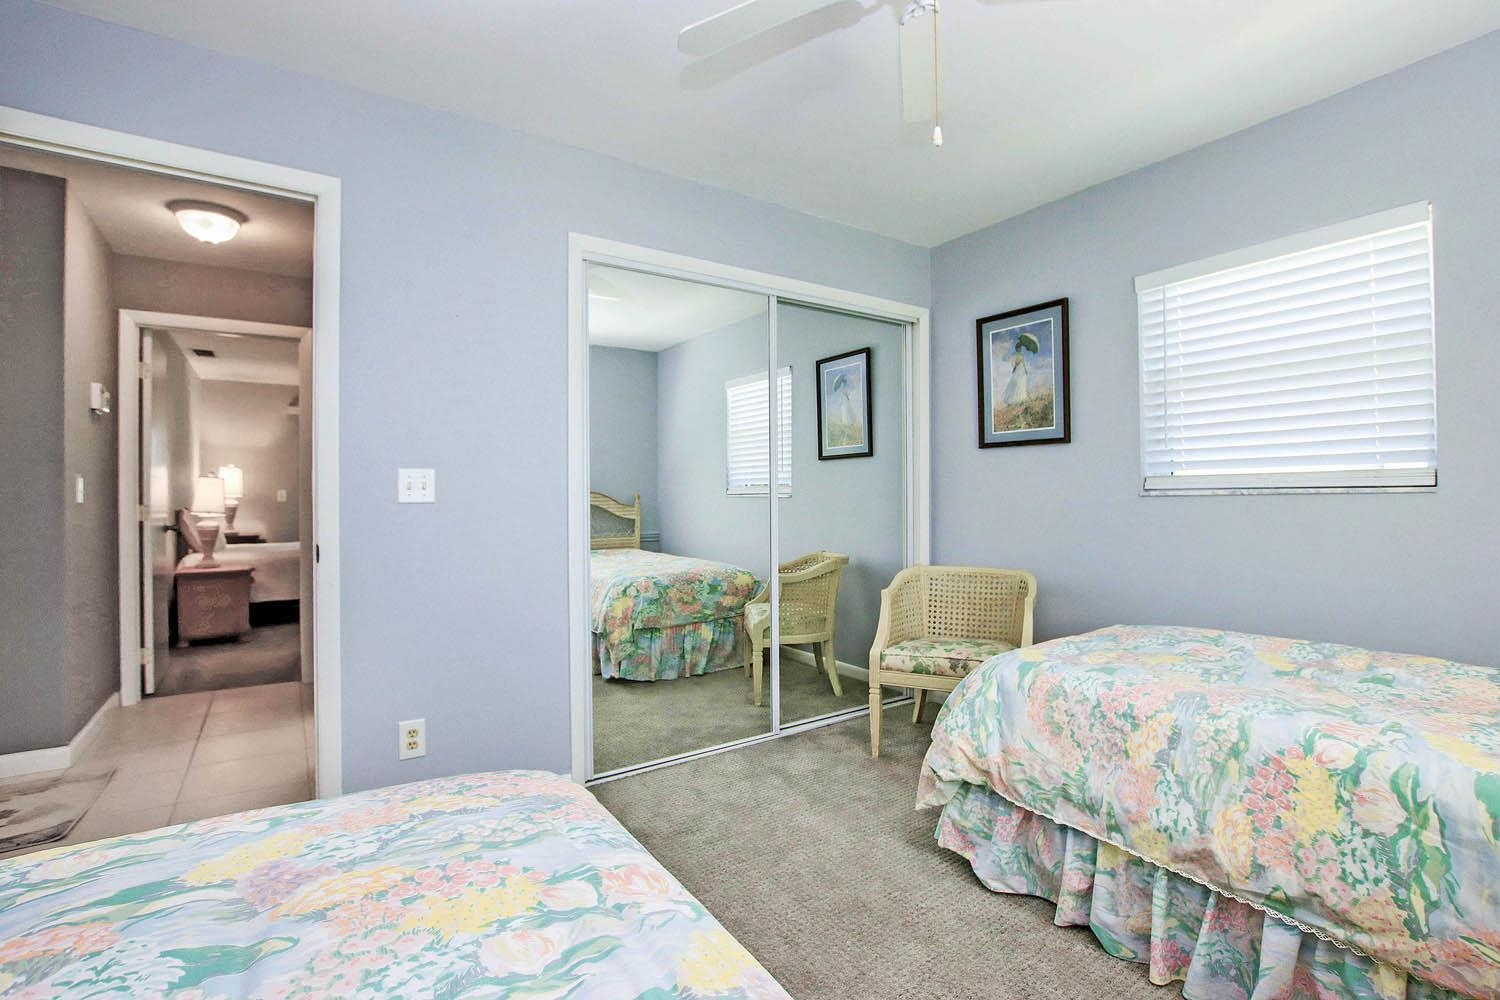 673 E Rocks Dr, Sanibel, Florida 33957, 3 Bedrooms Bedrooms, ,2 BathroomsBathrooms,Residential,For Sale,E Rocks Dr,2240390